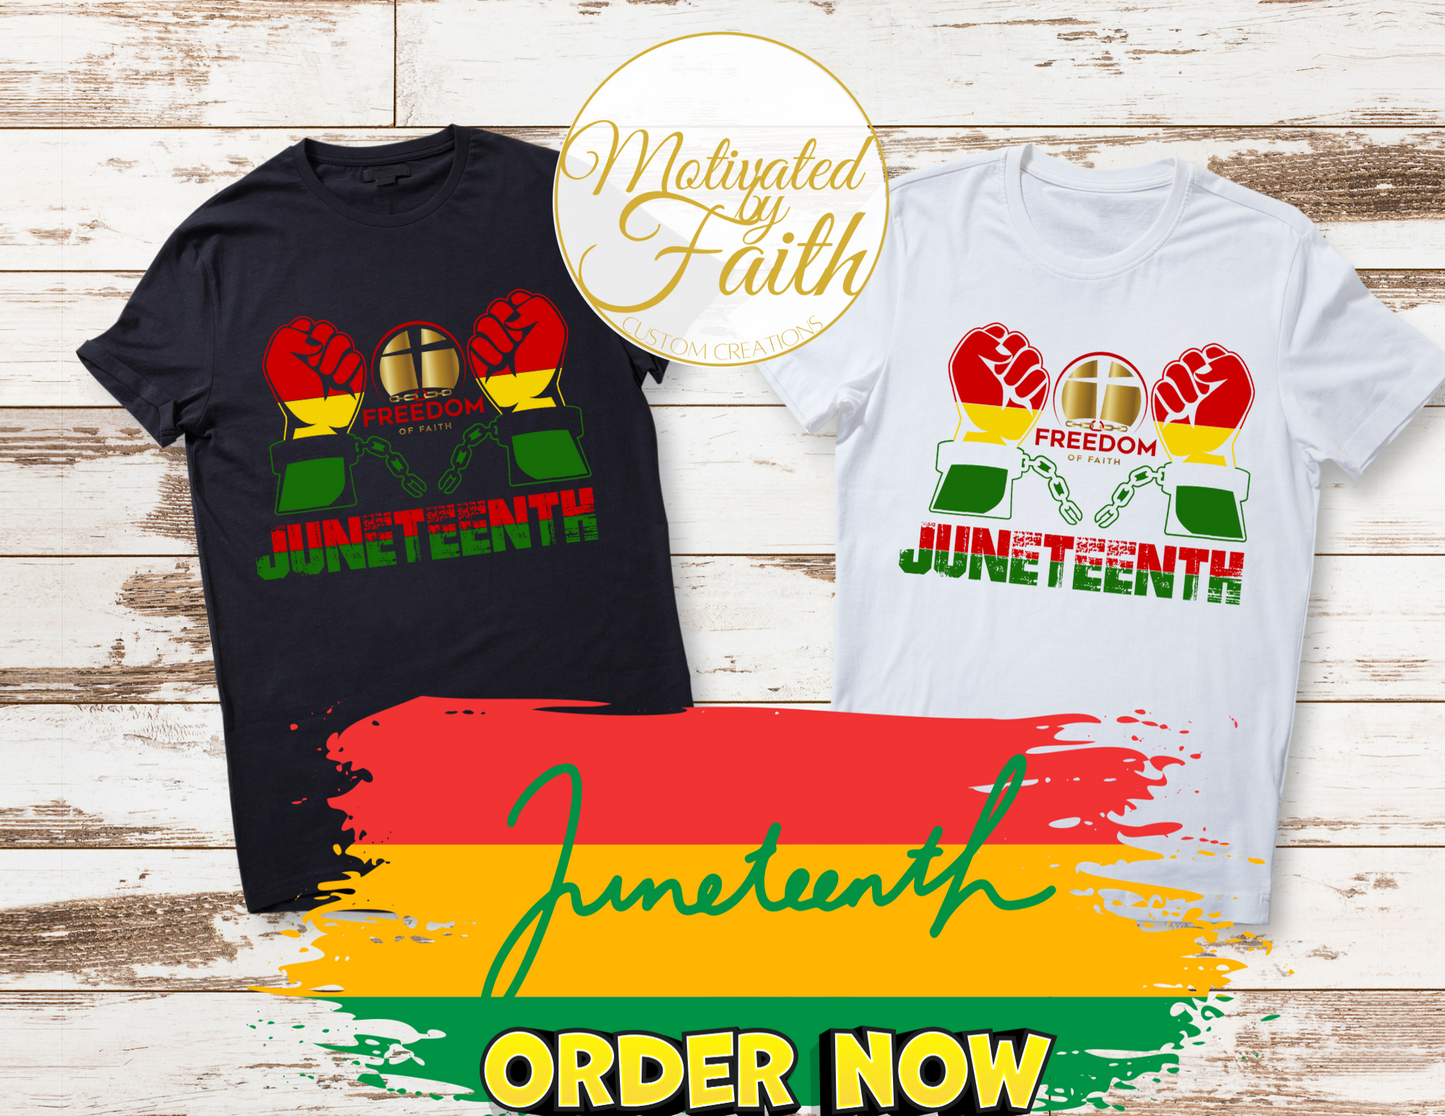 Juneteenth Freedom of Faith T-shirt